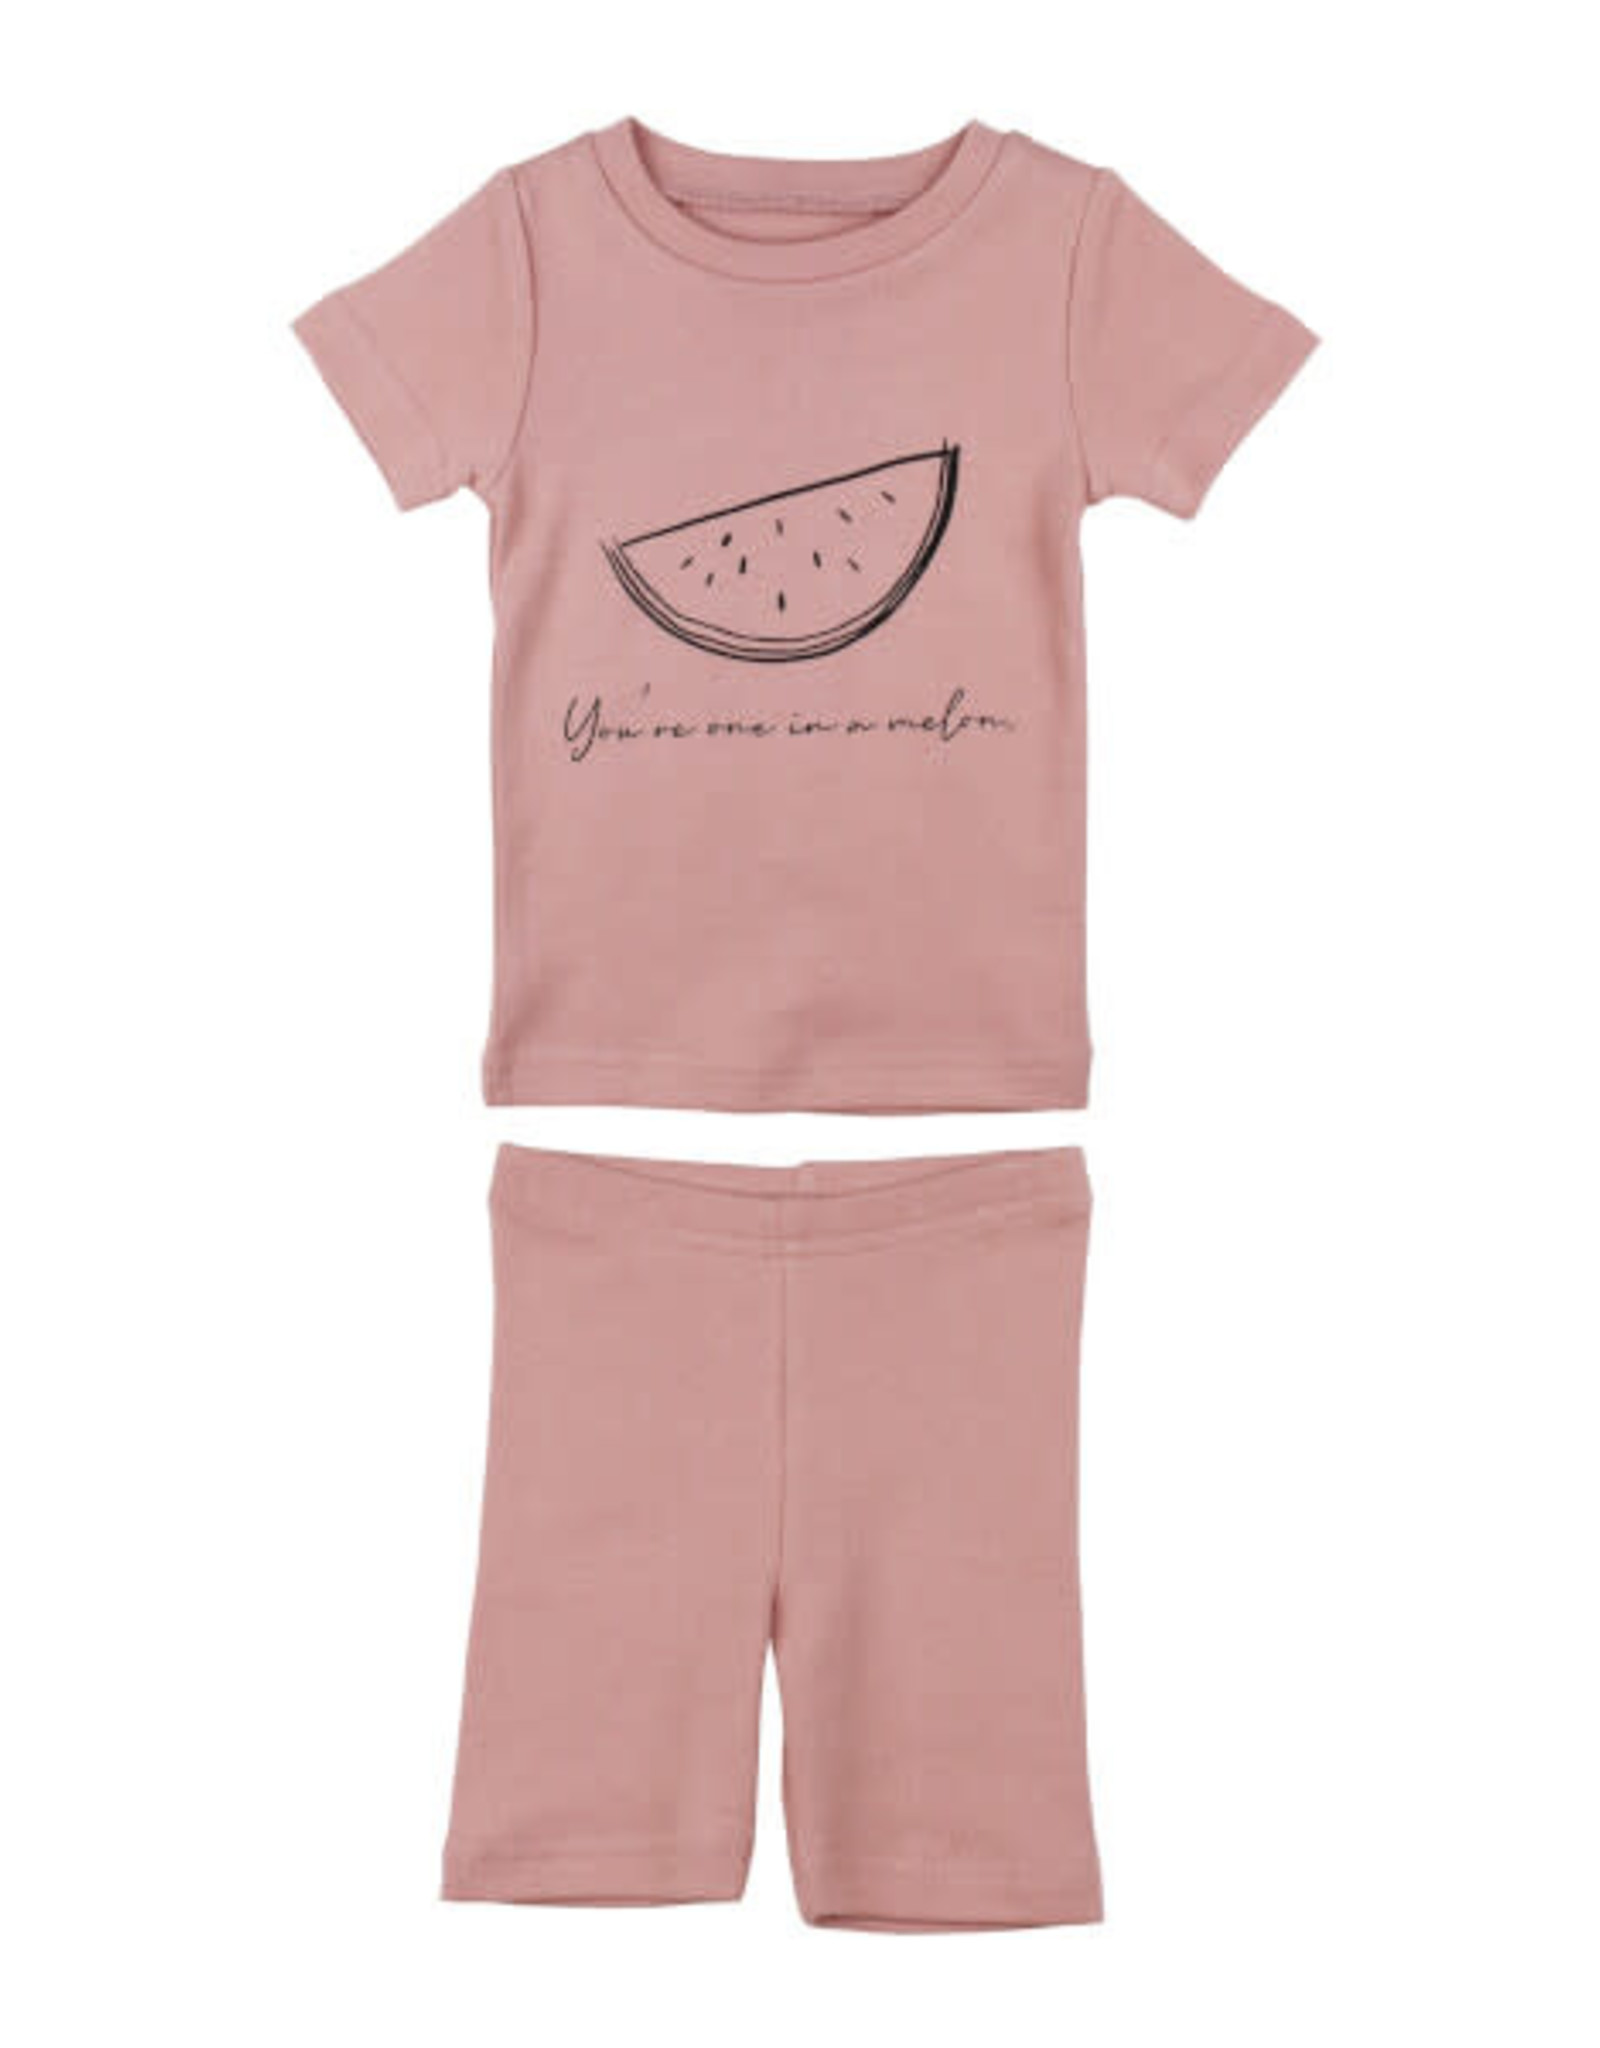 L'oved Baby Kids' PJ Set Watermelon